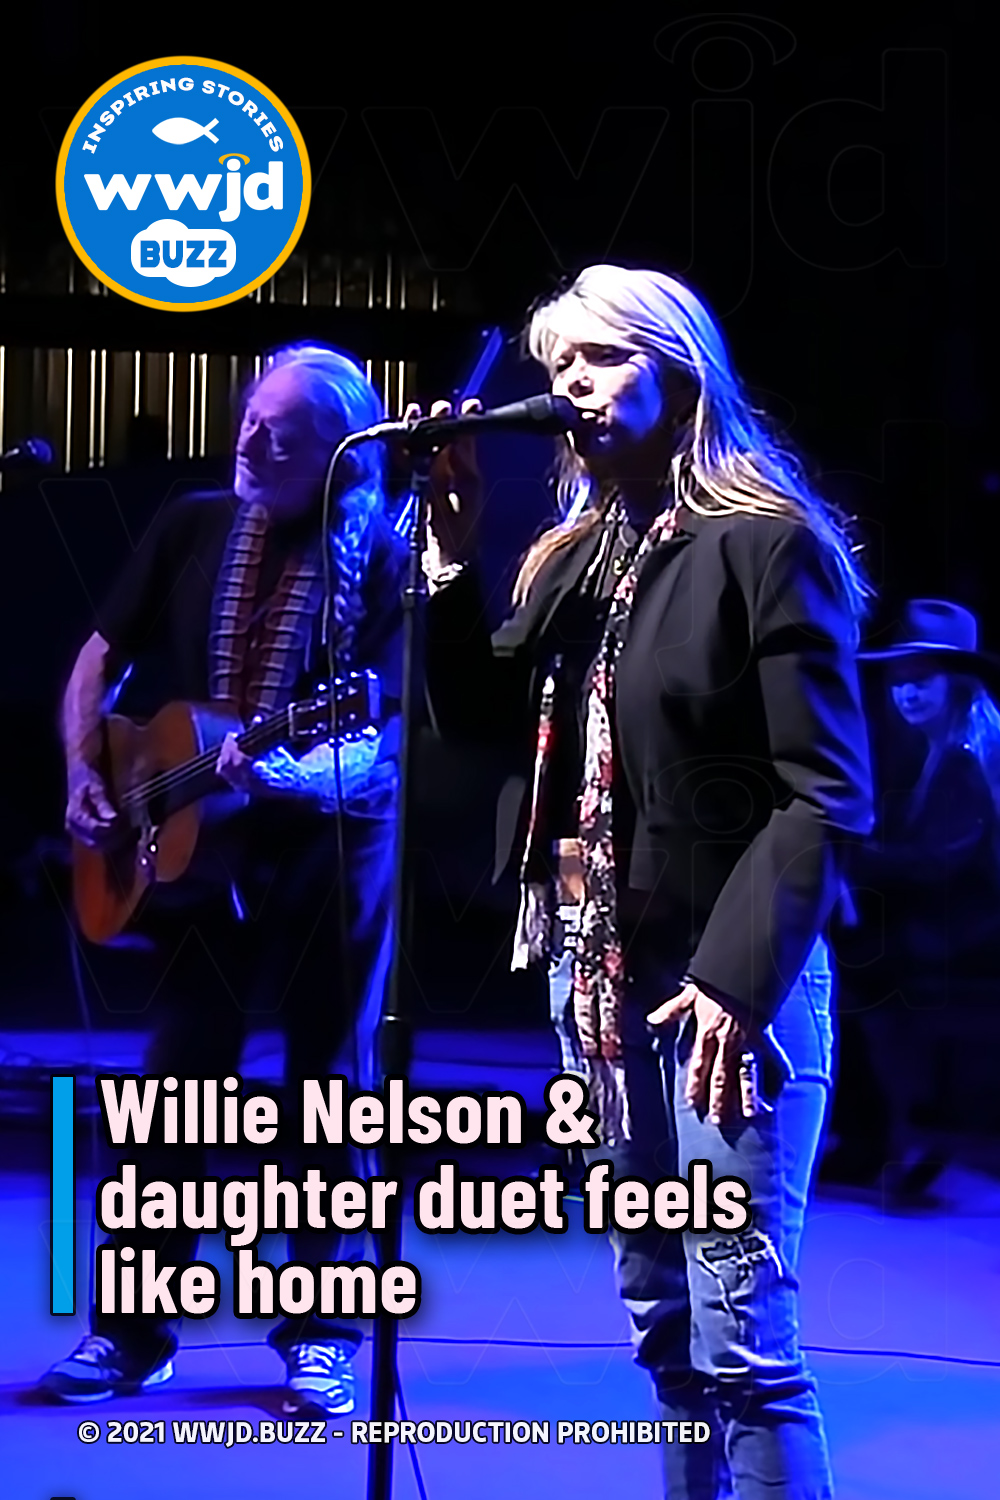 Willie Nelson & daughter duet feels like home